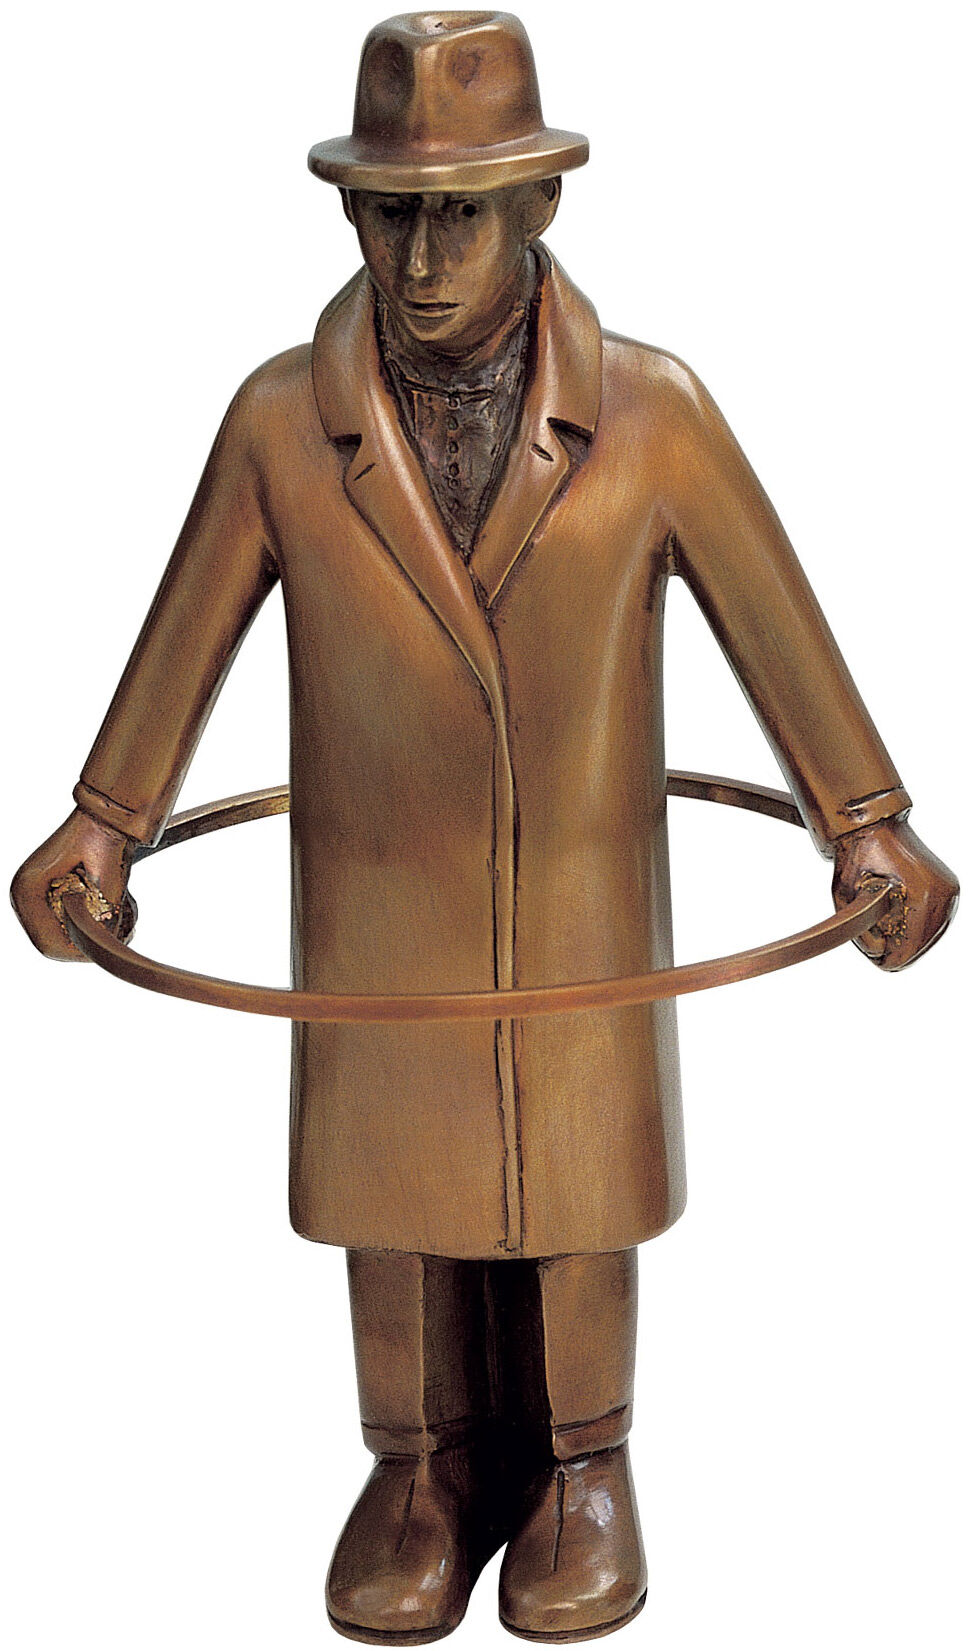 Sculpture "Man with Tyre - Noli me tangere!", bronze by Siegfried Neuenhausen